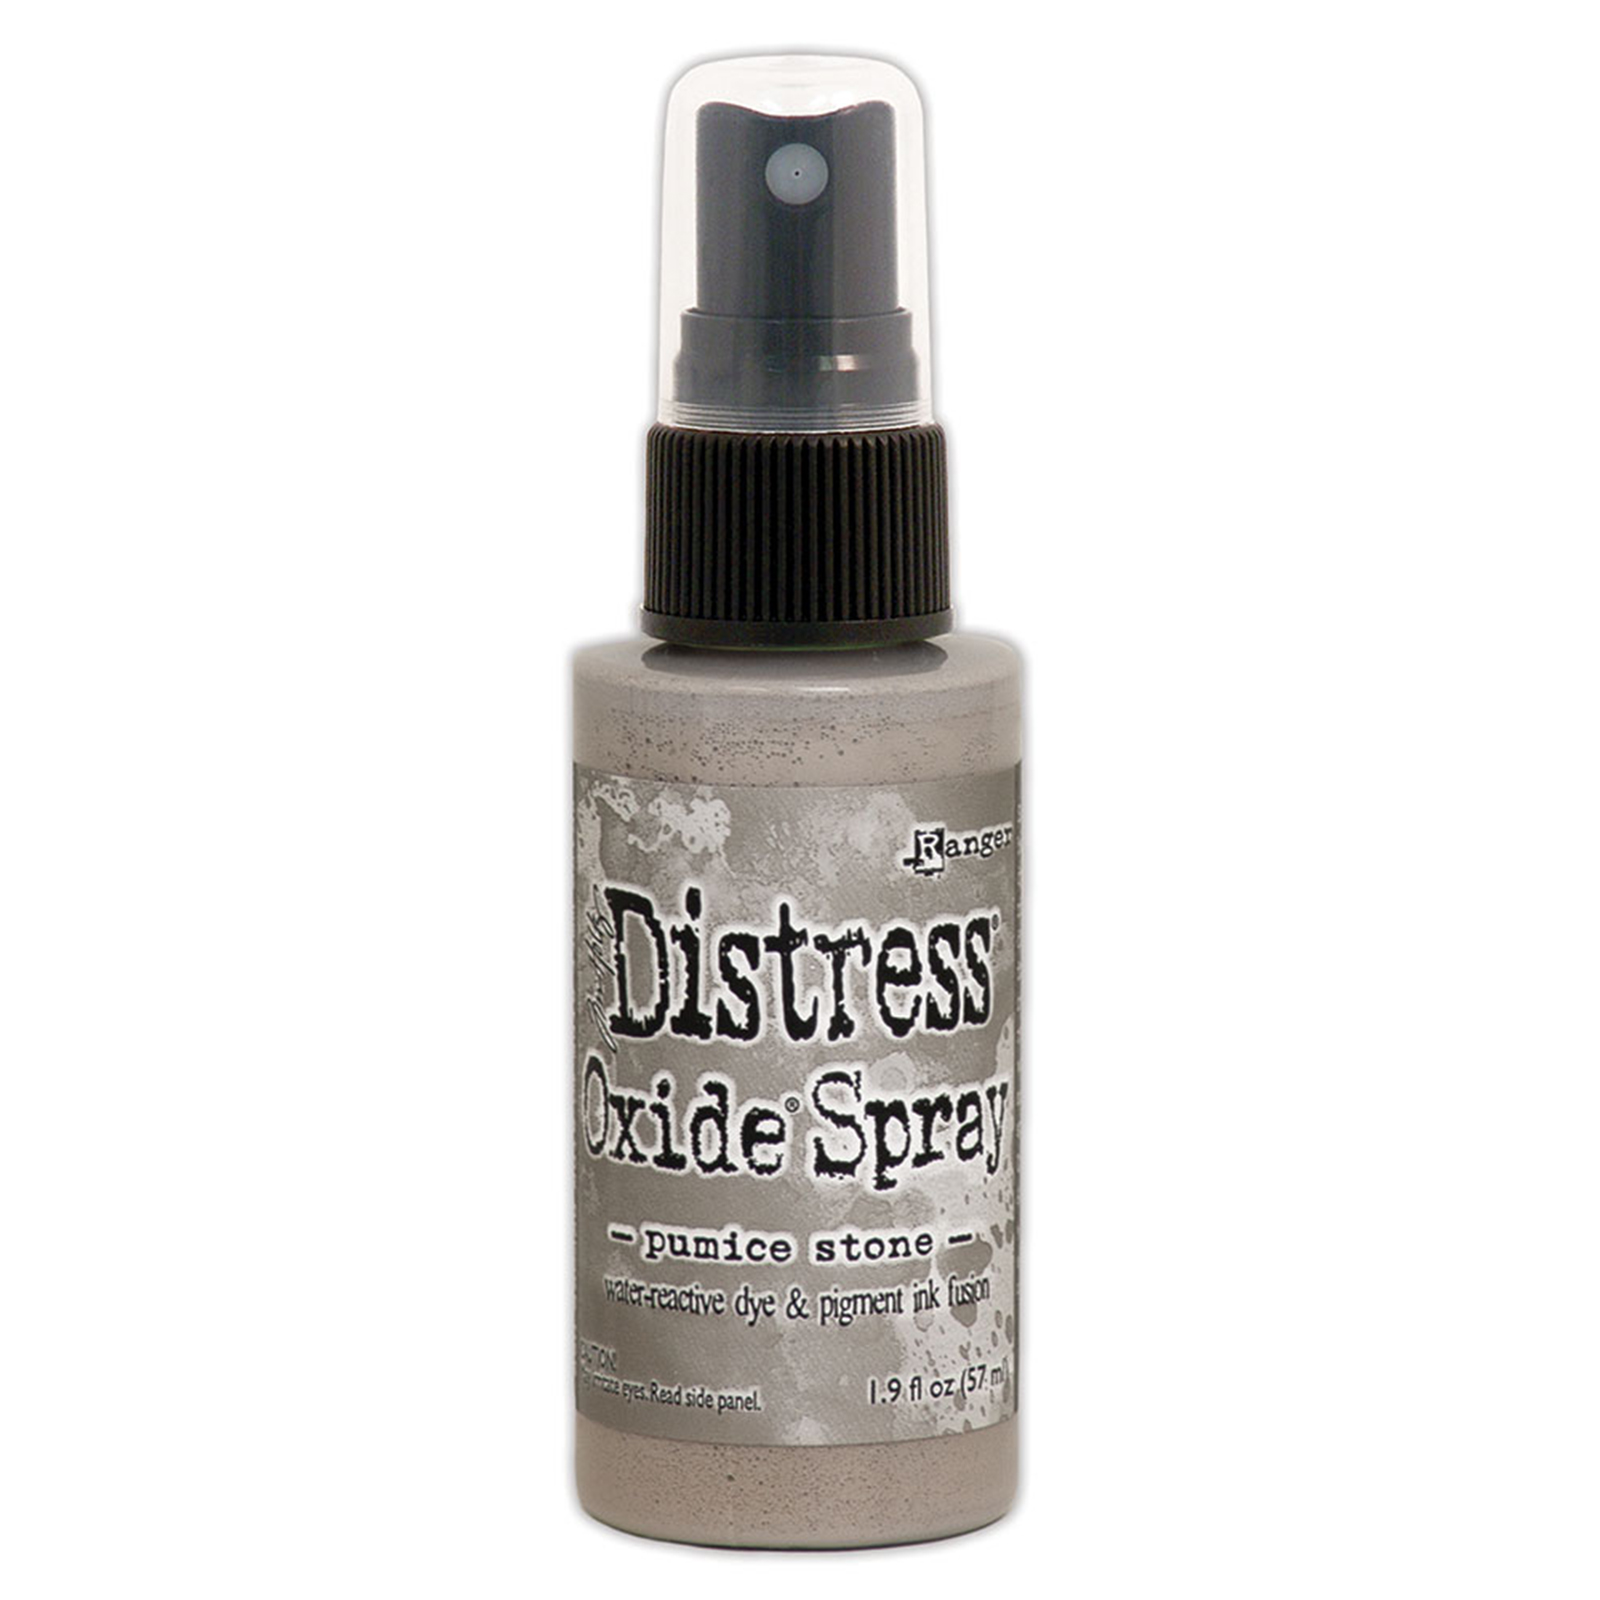 Ranger • Distress oxide spray Pumice stone